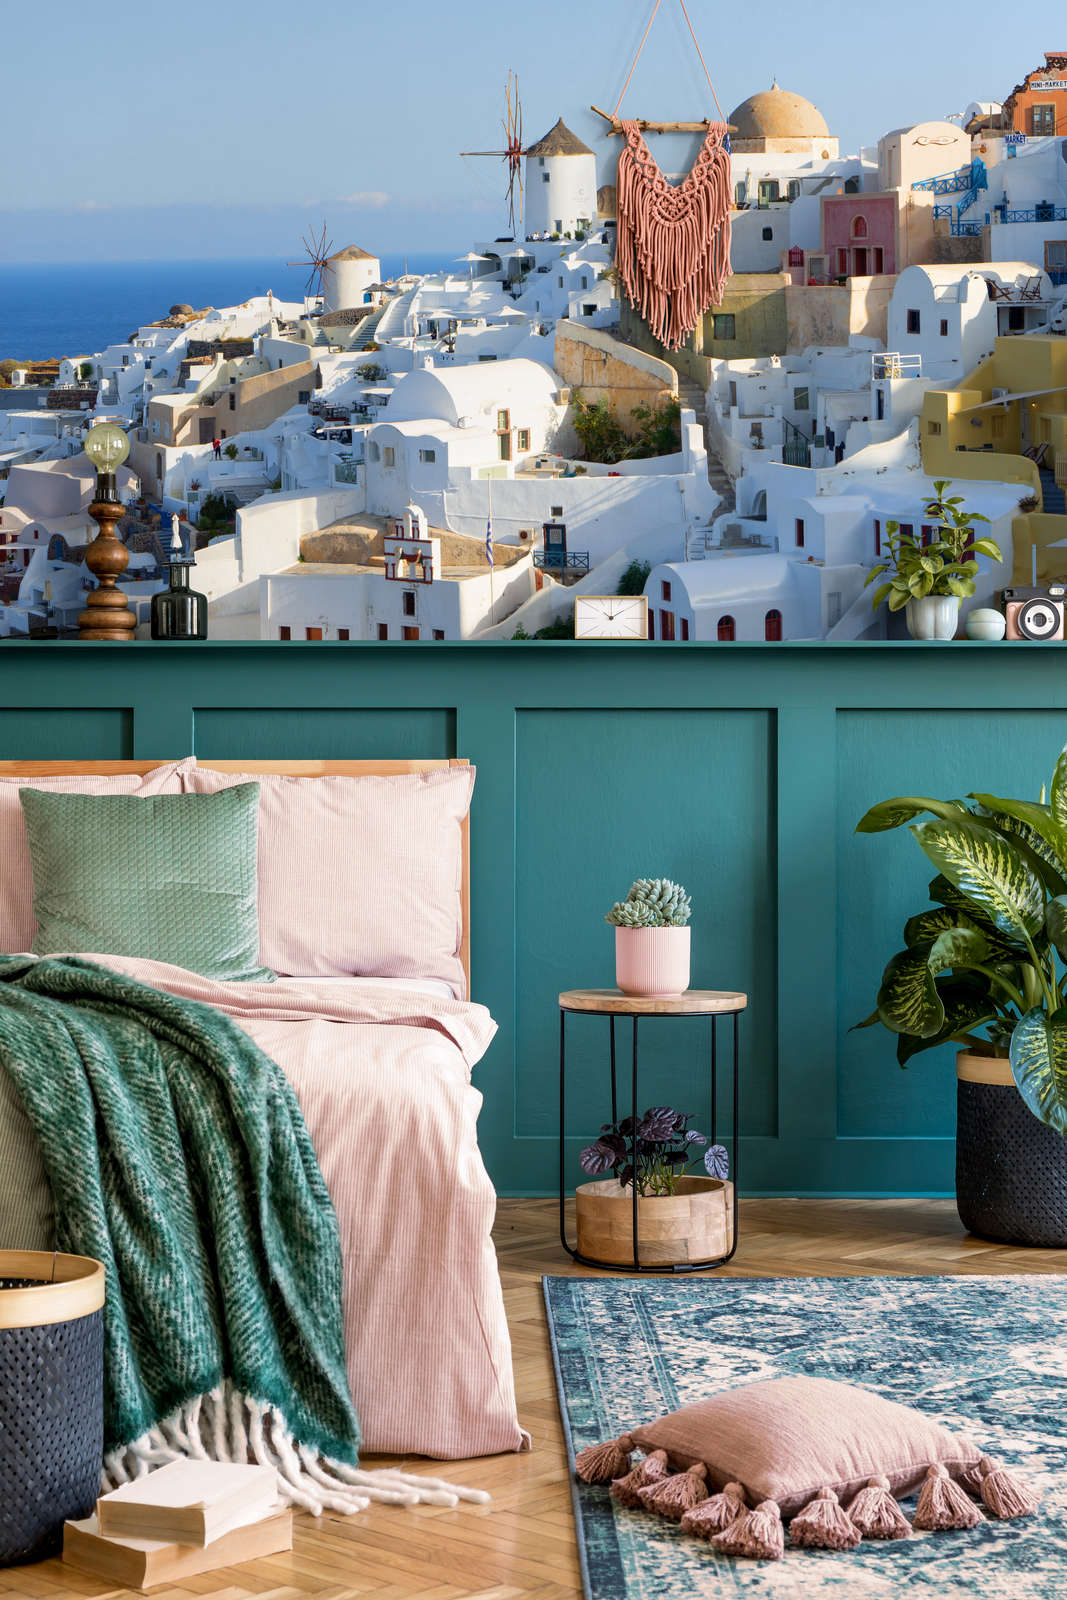             Digital behang Santorini's smalle steegjes - Premium gladde vlieseline
        